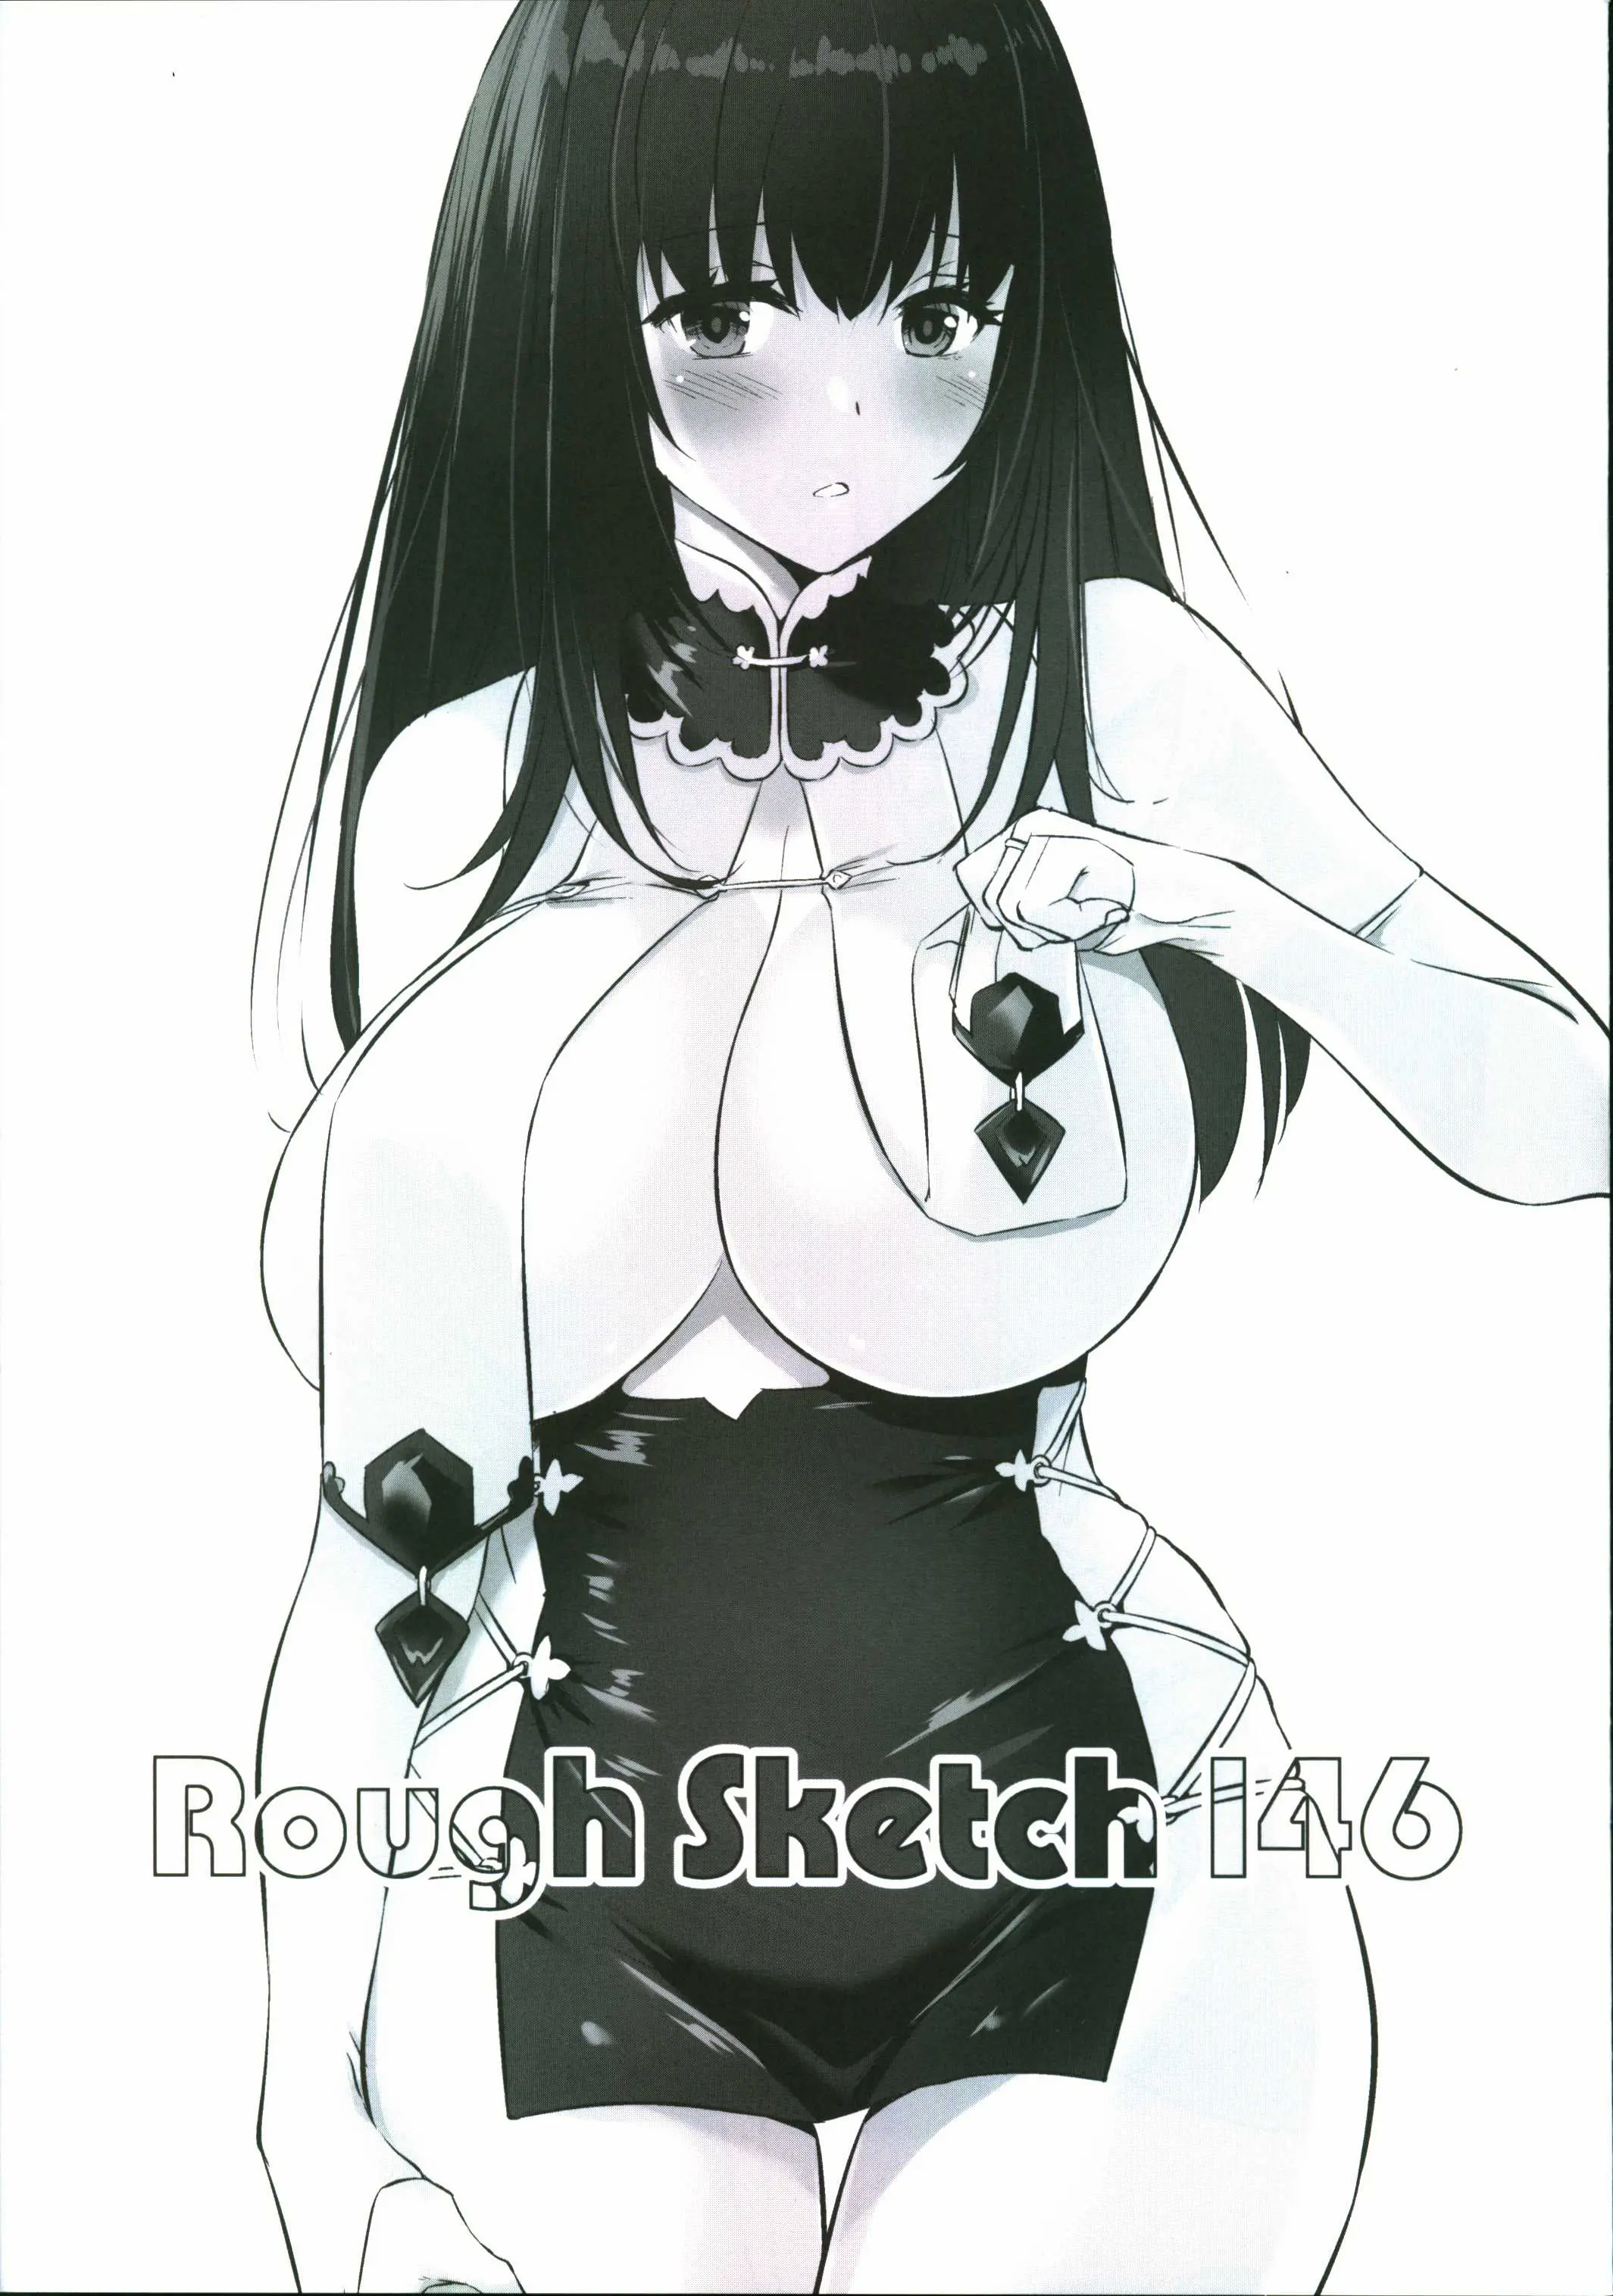 Doujinshi - Rough Sketch 146 / Digital Lover